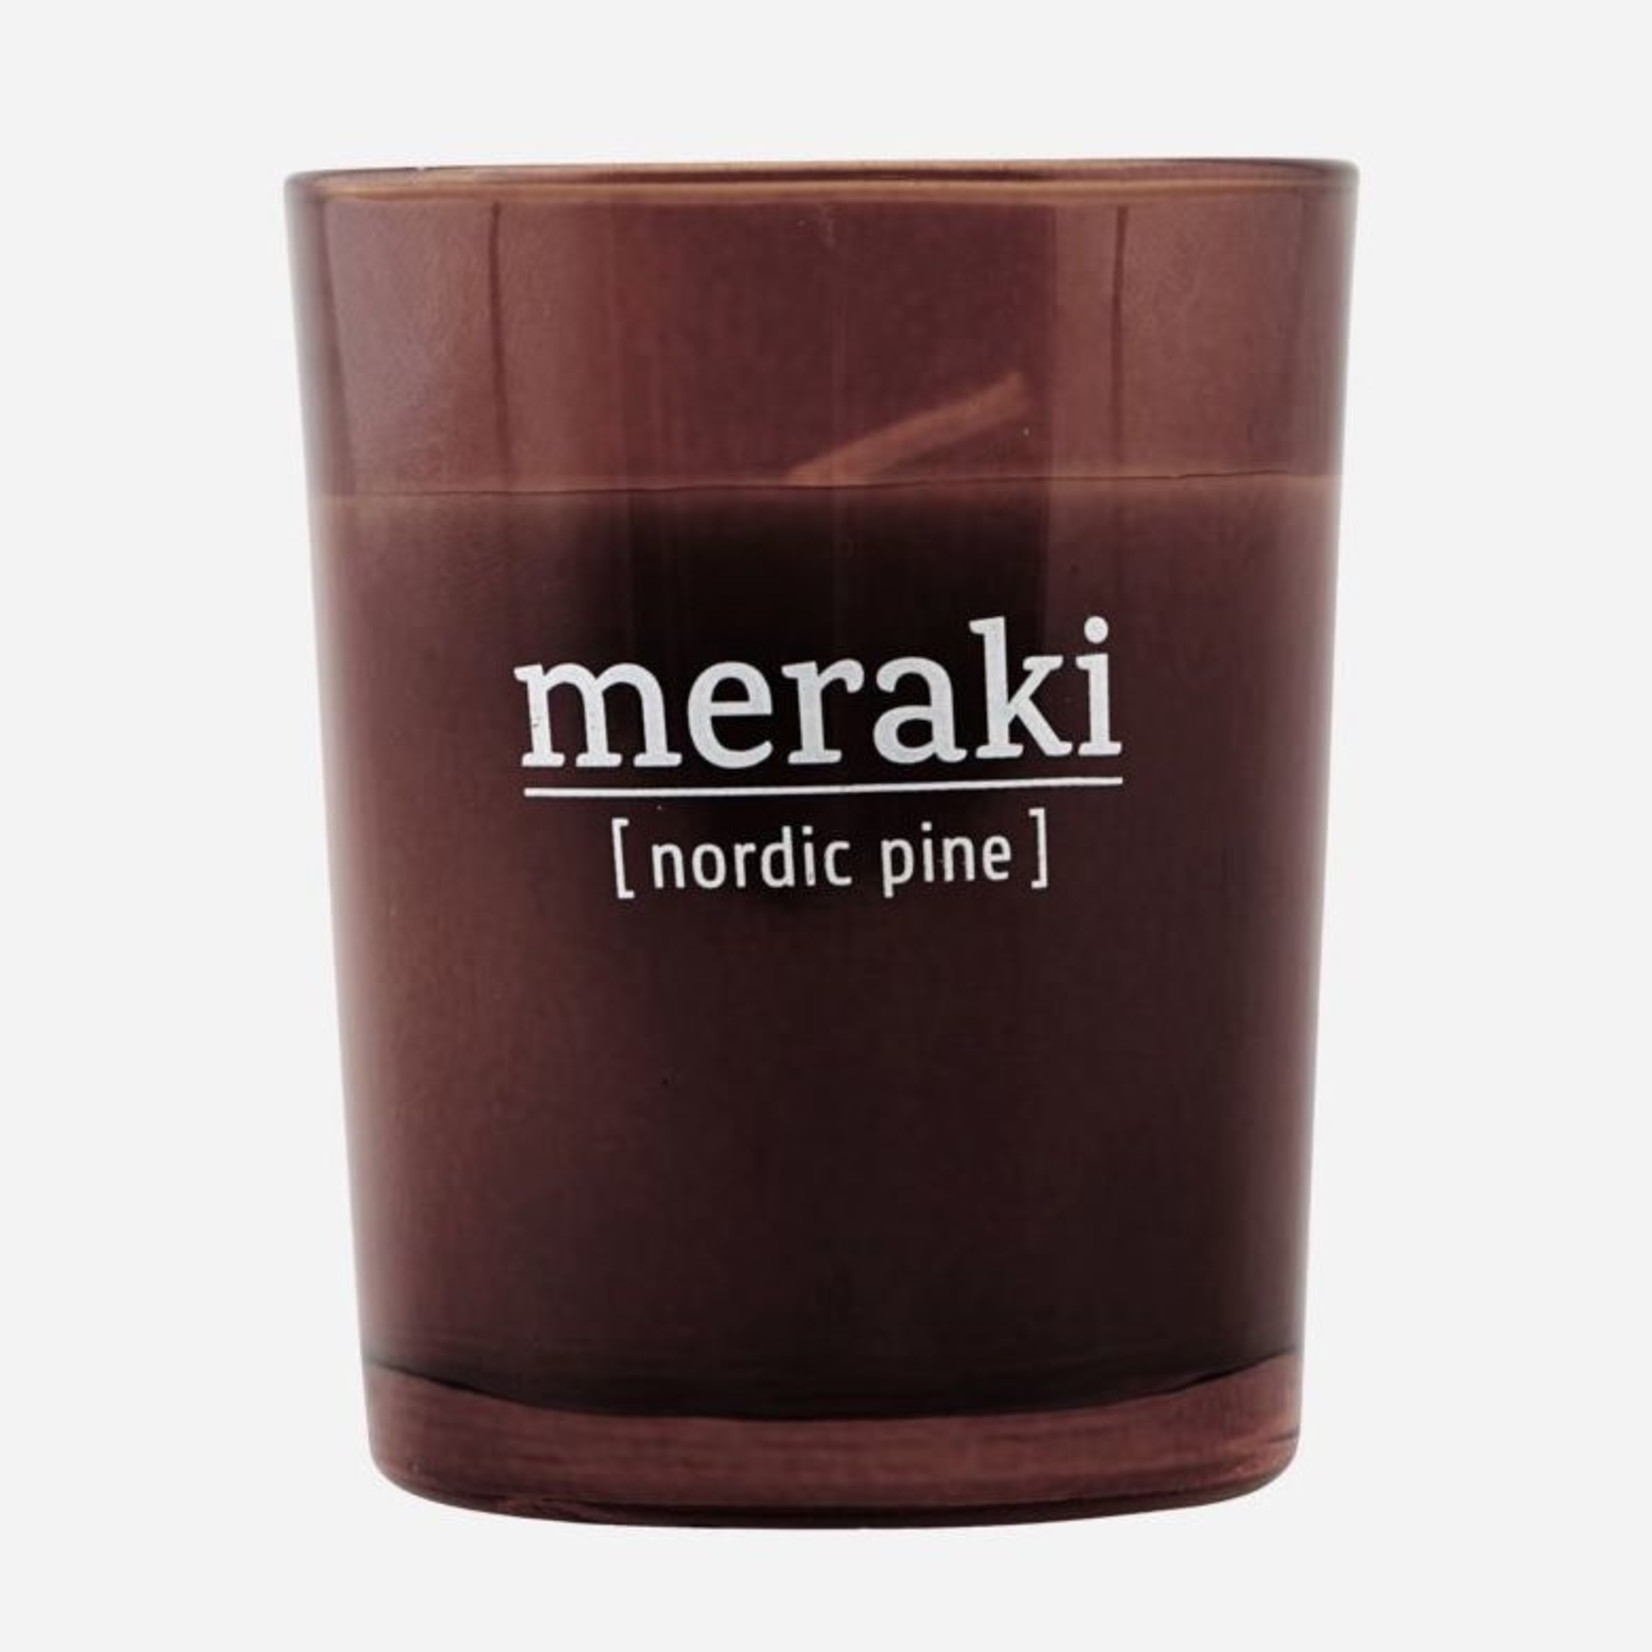 Meraki Meraki geurkaars in glas (meerdere geuren)